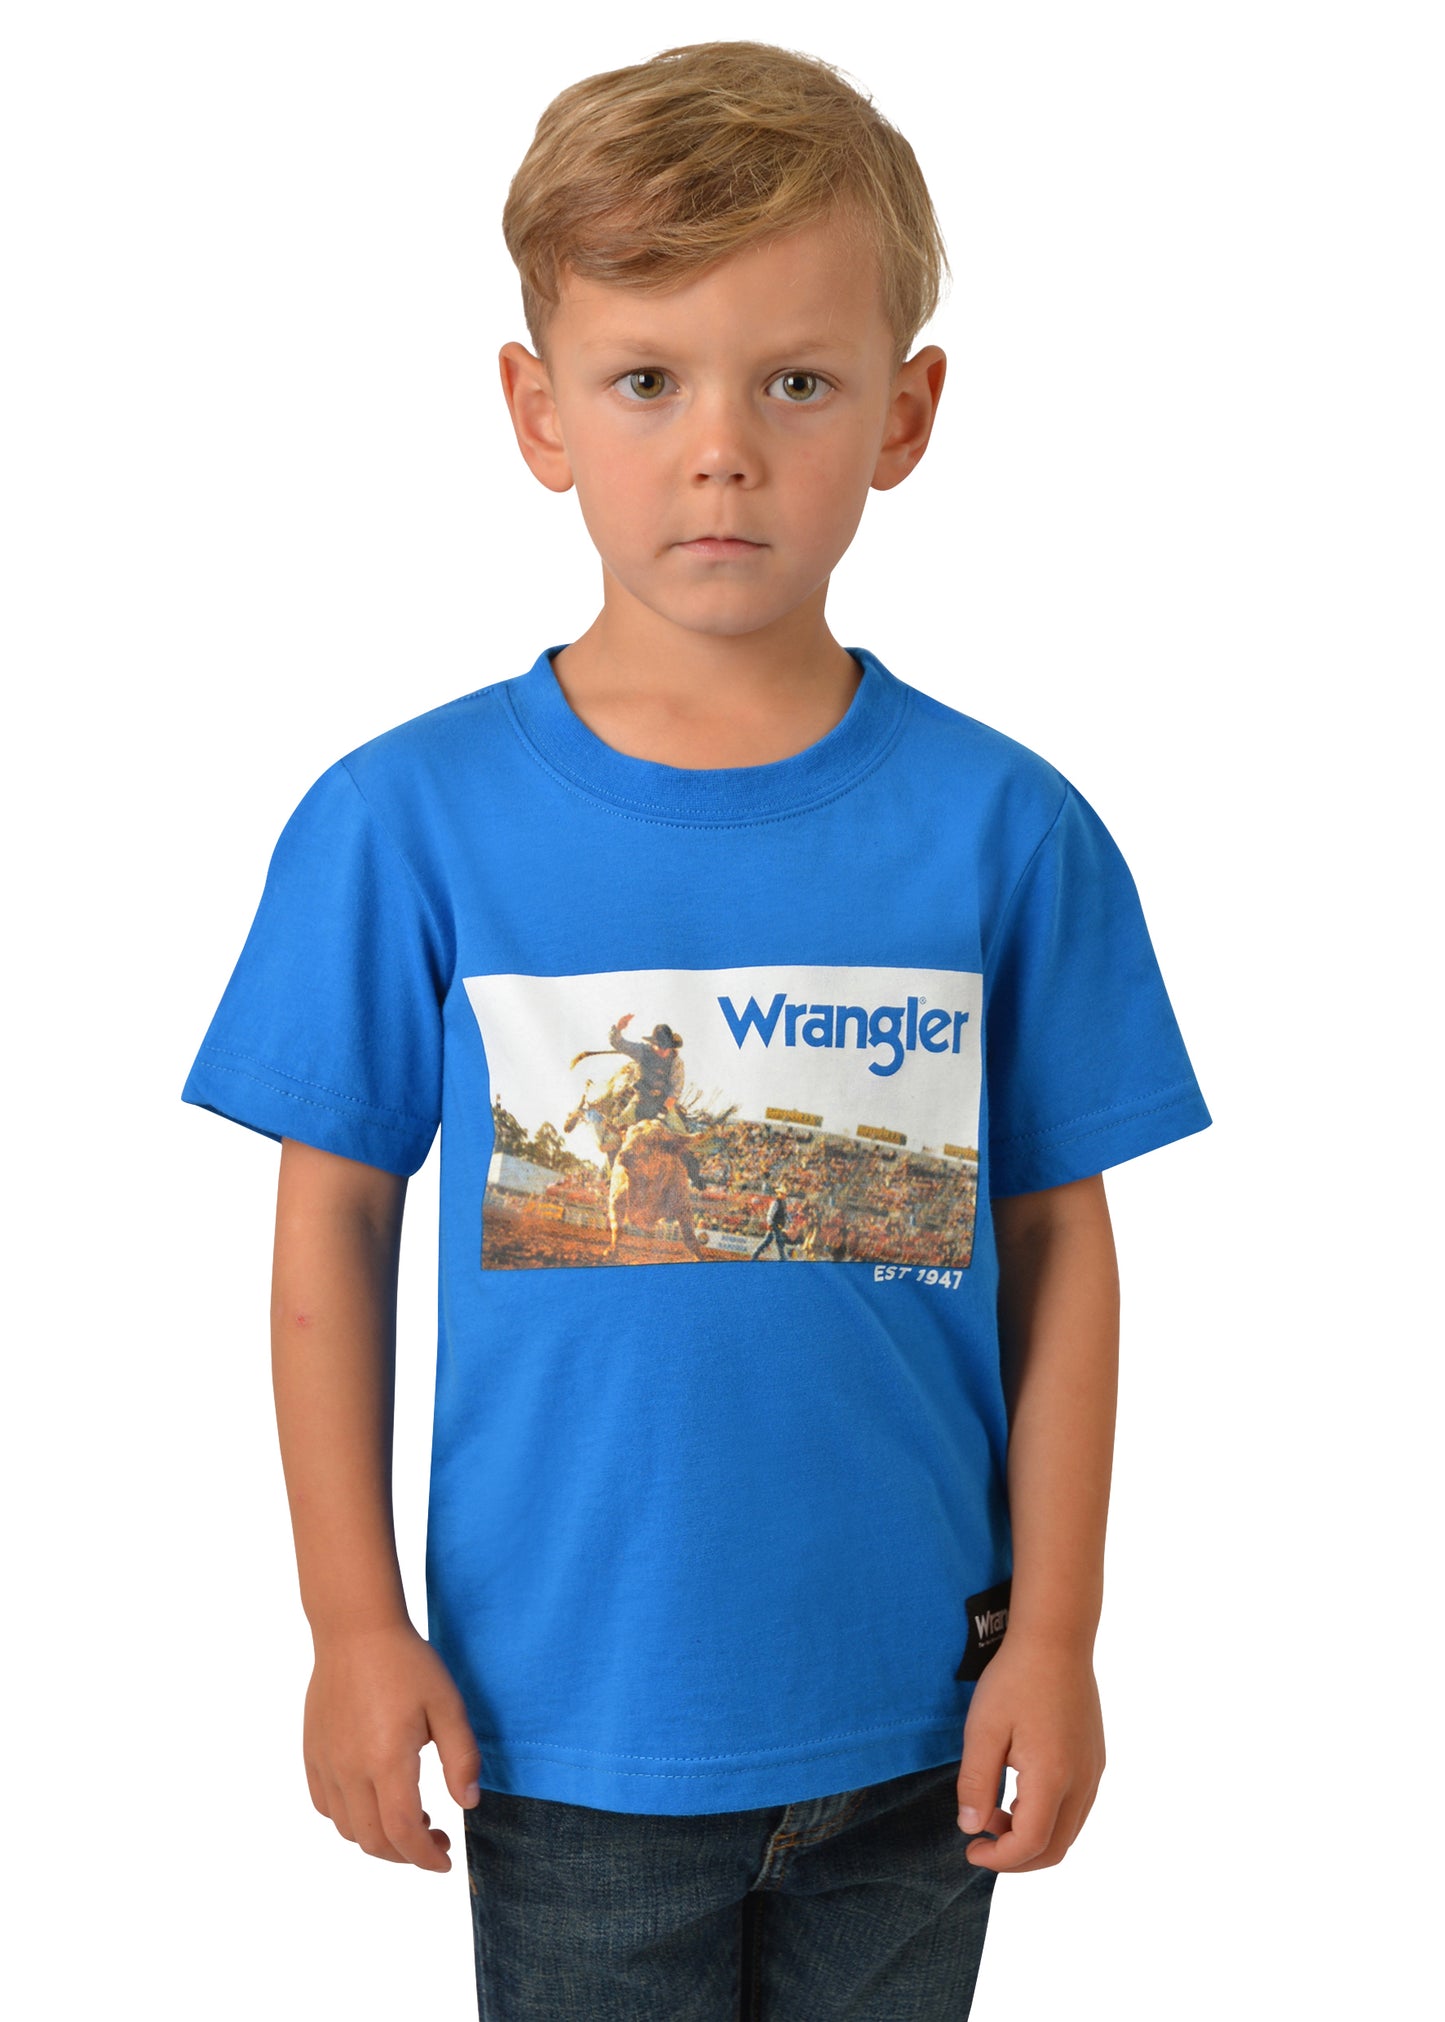 Wrangler Boys Wells S/S Tee - X2S3557818